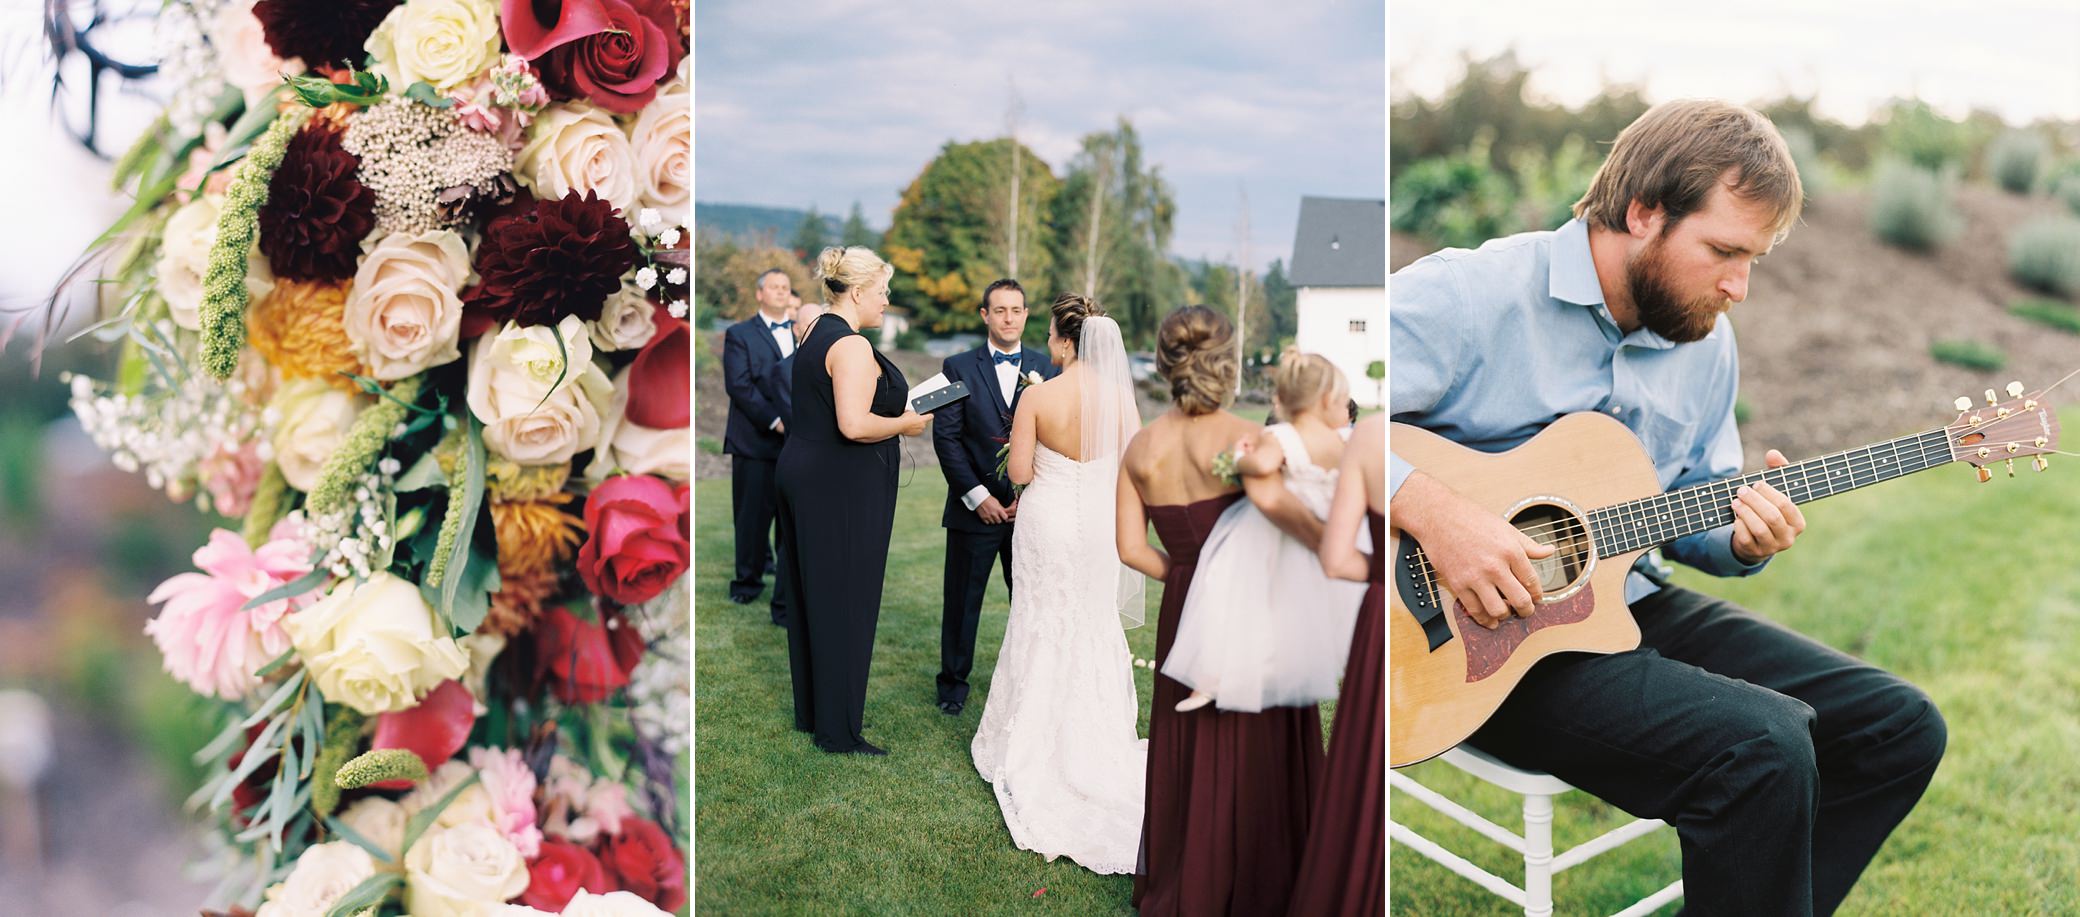 Portland Oregon wedding photographer Ceremony details music flowers